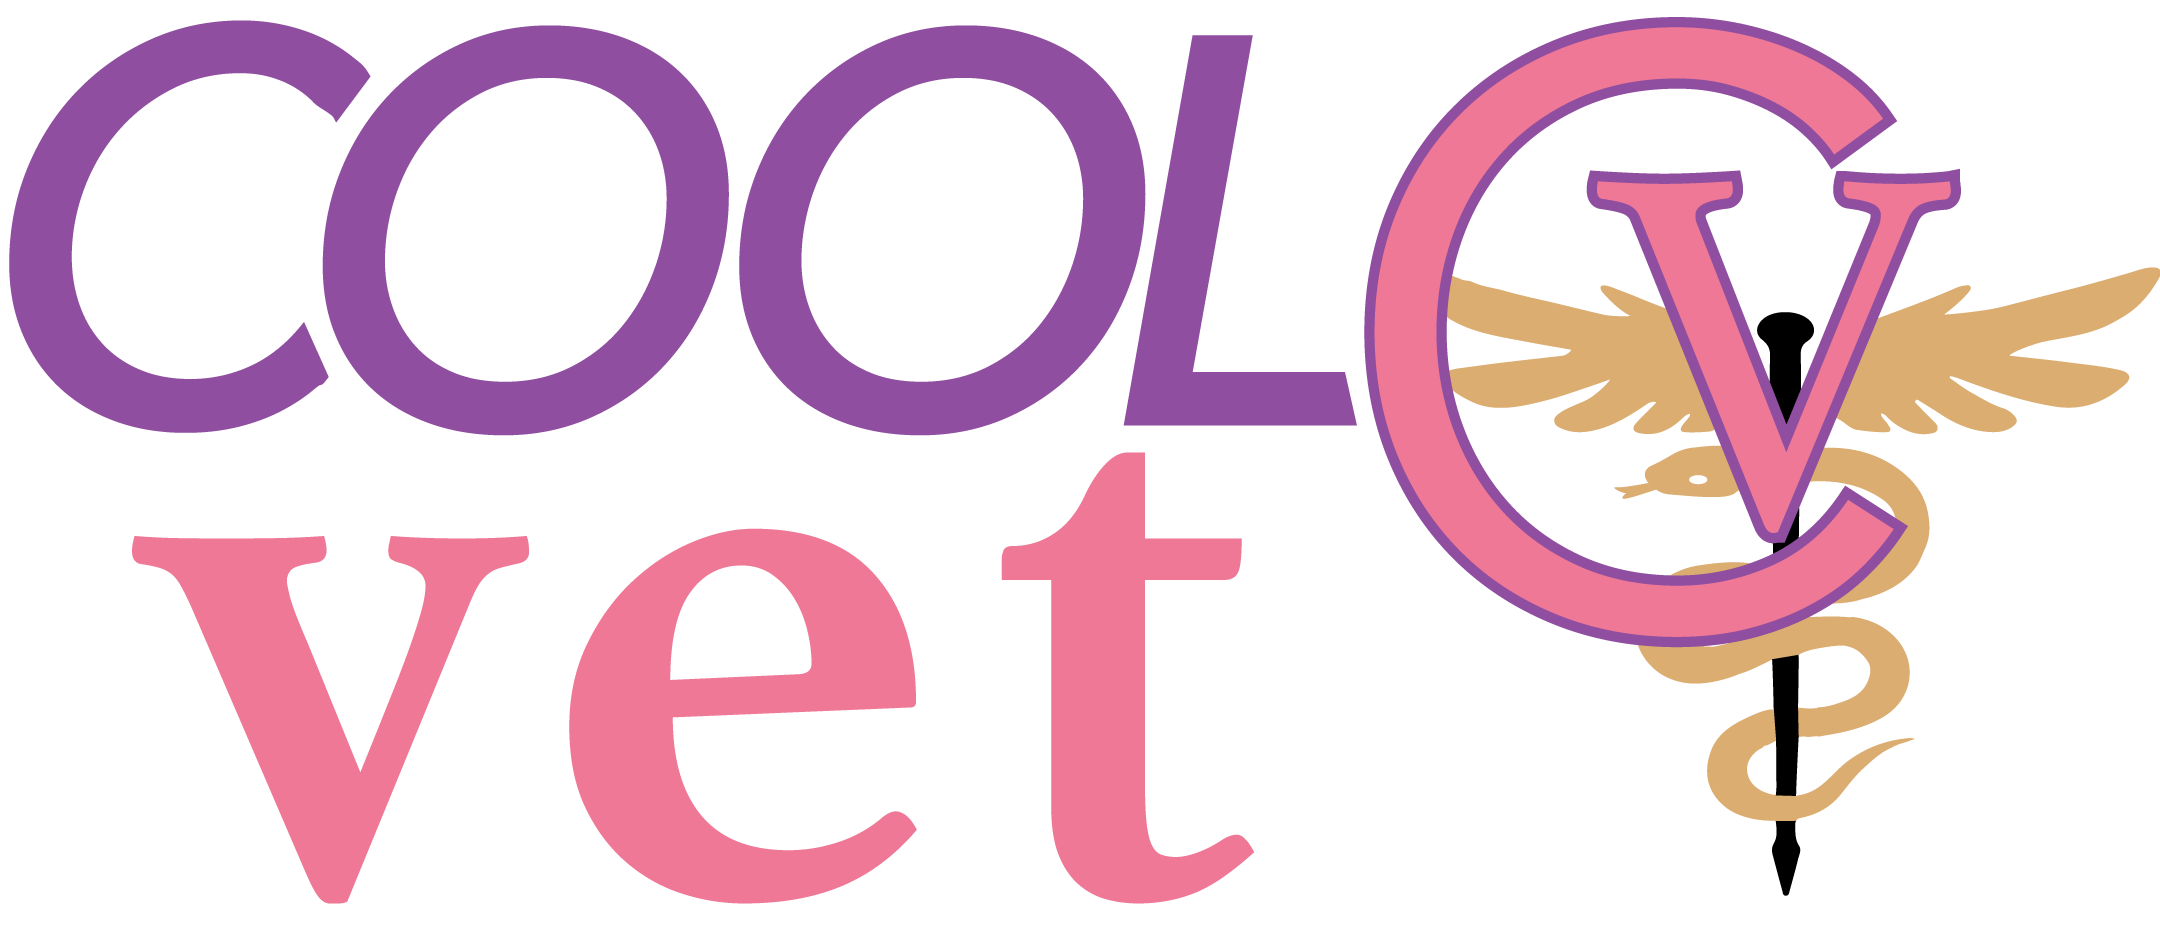 Cool Vet logo designed by Interlace Communications